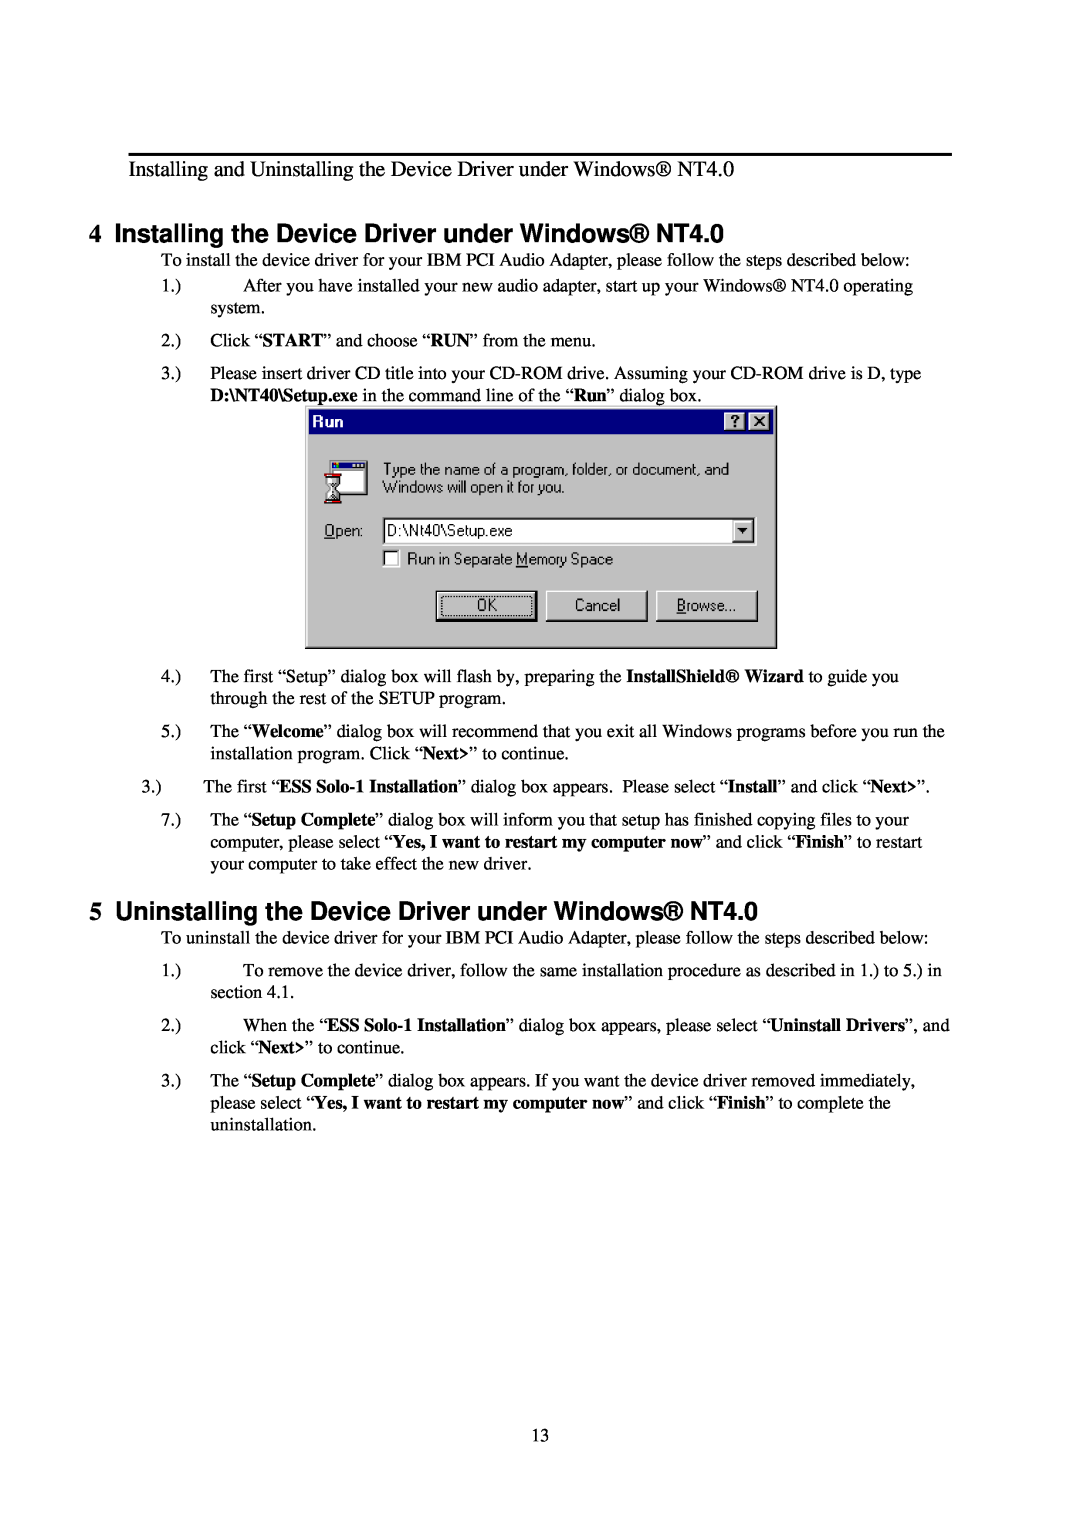 IBM L70 manual Installing the Device Driver under Windows NT4.0, Uninstalling the Device Driver under Windows NT4.0 